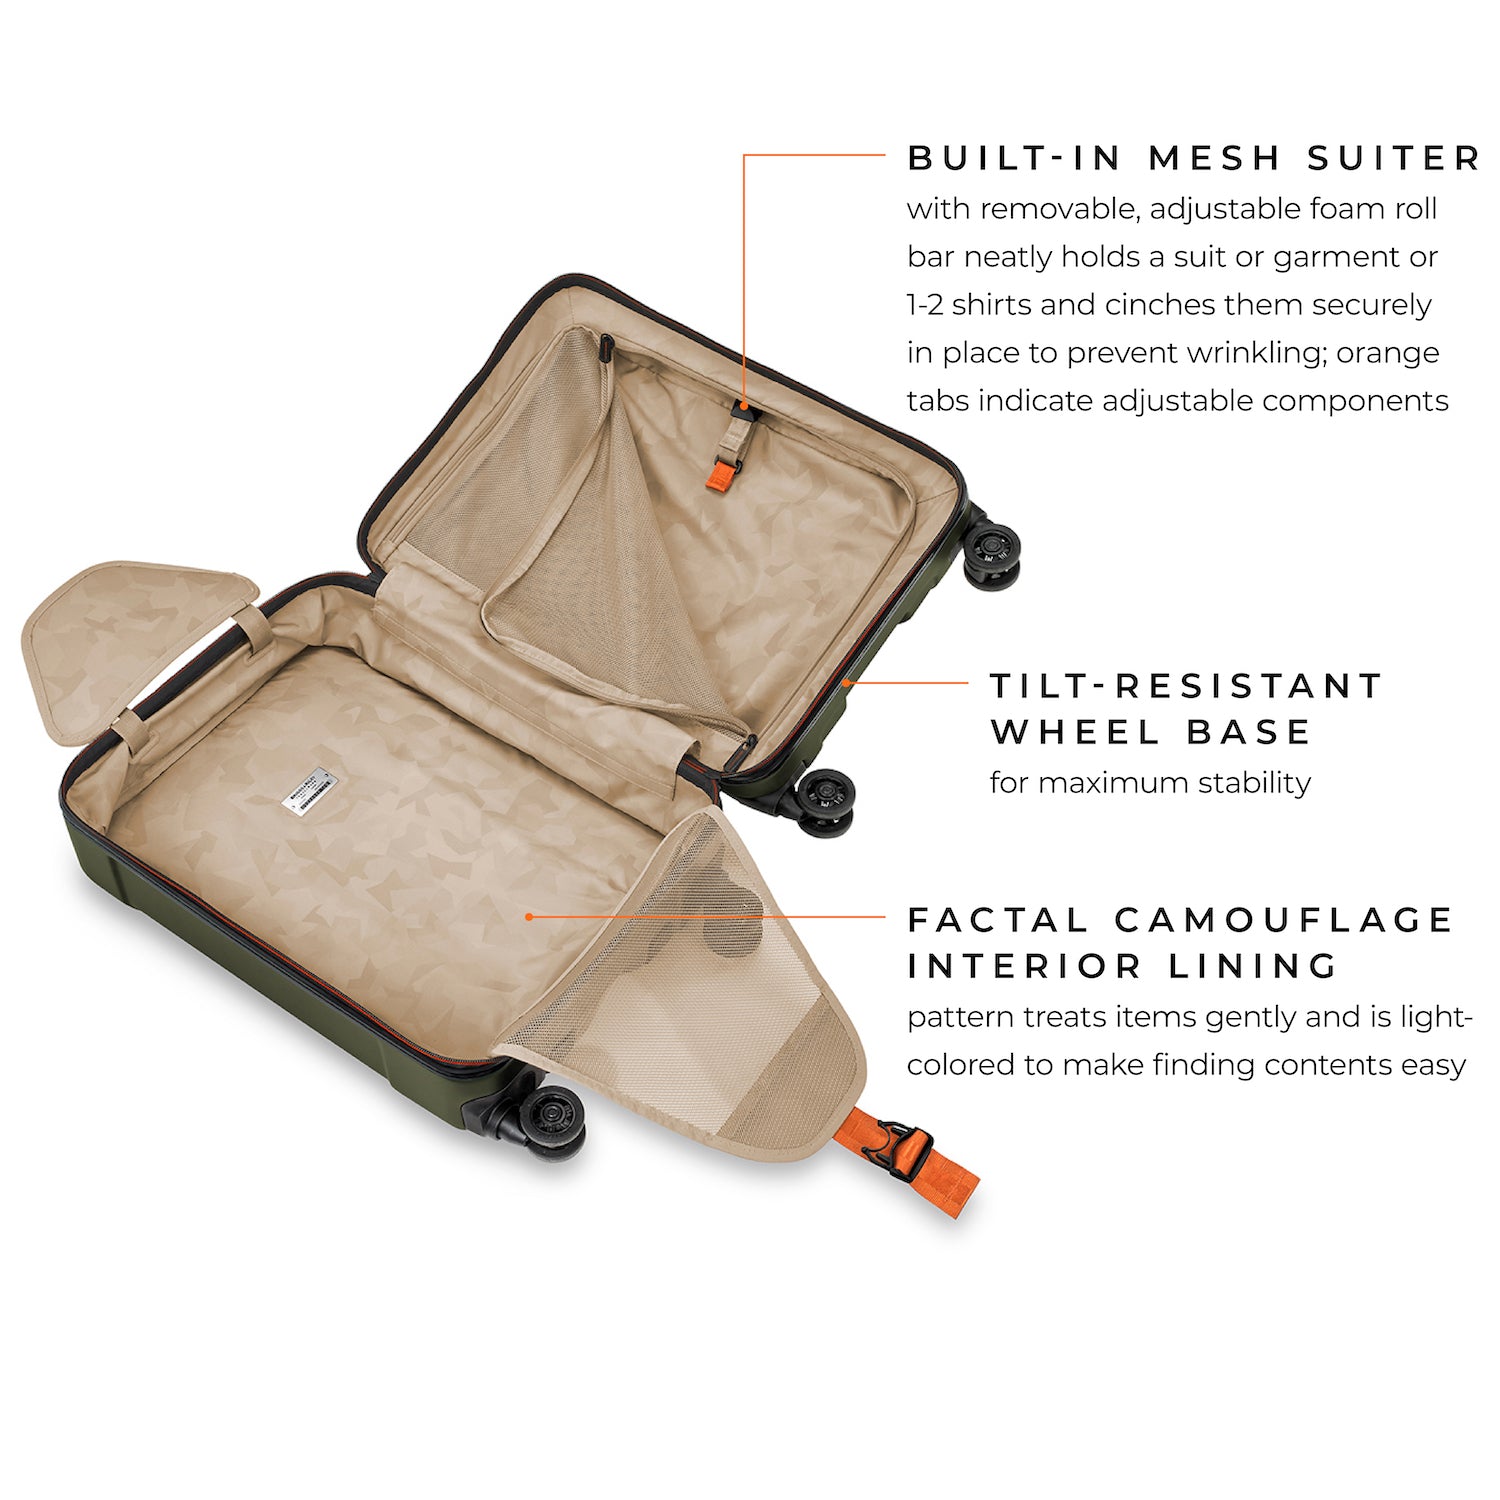 Zara - Hardside Carry-On Spinner Luggage - Orange - Men